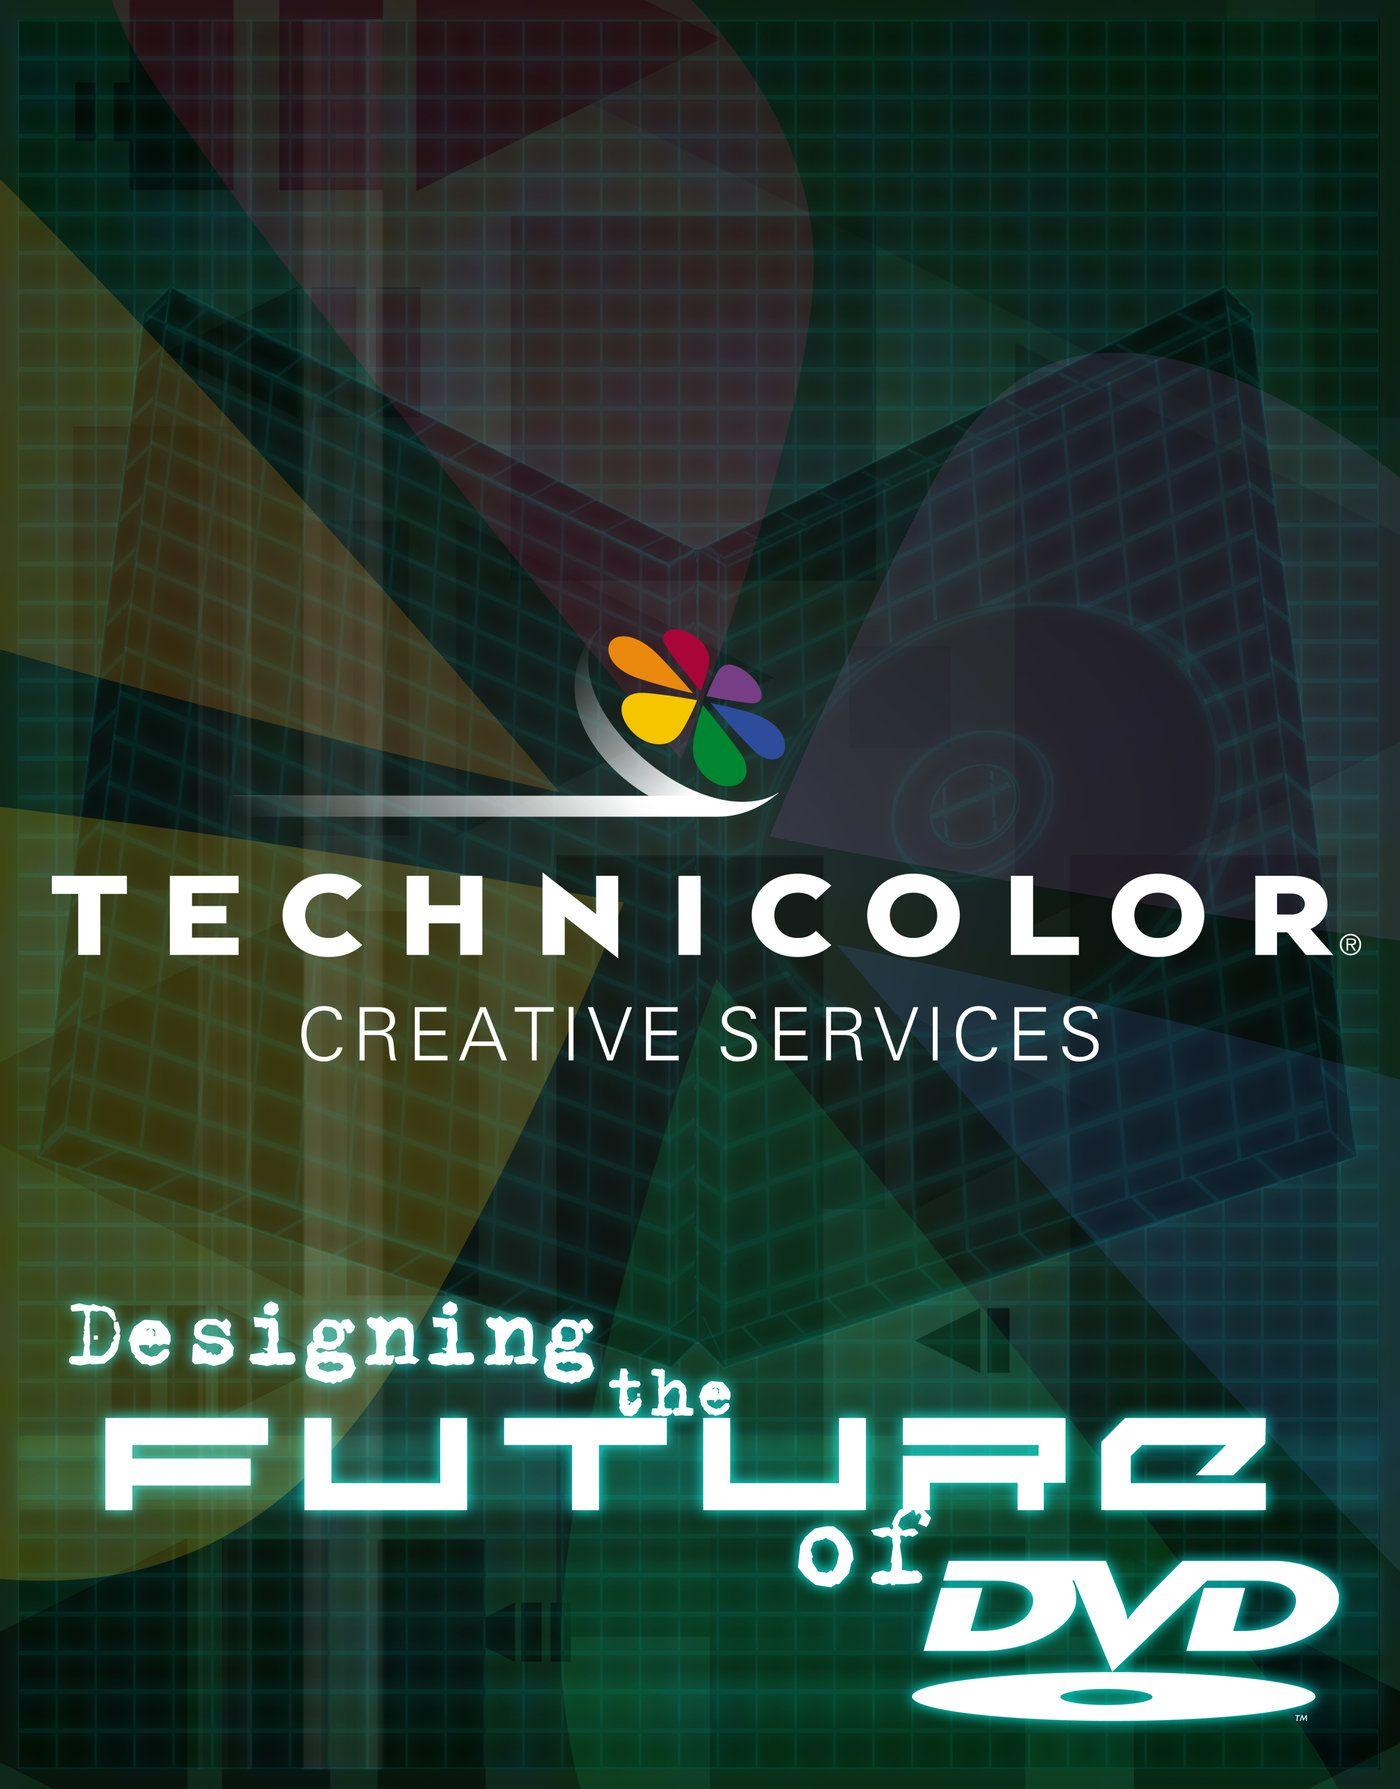 Technicolor Logo - Technicolor Logo Branding by Michael Perez at Coroflot.com